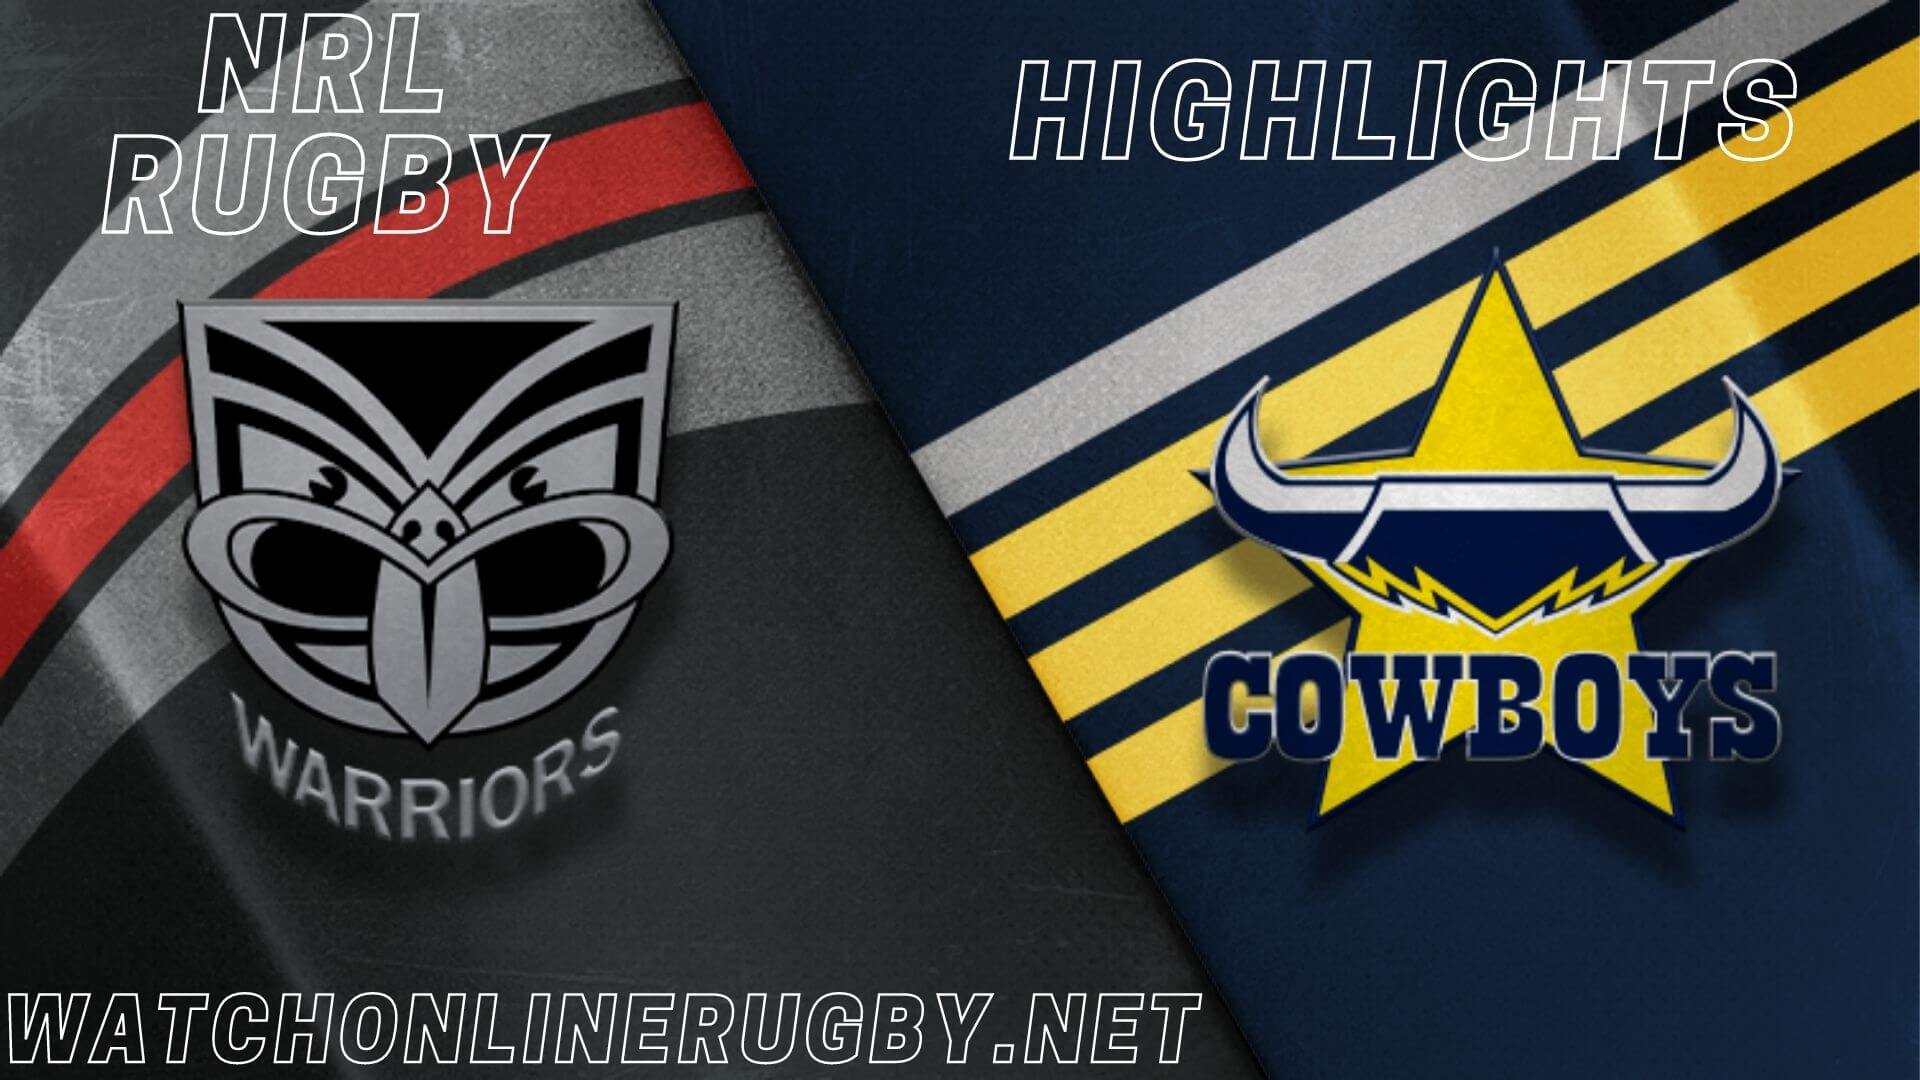 Cowboys Vs Warriors Highlights RD 23 NRL Rugby